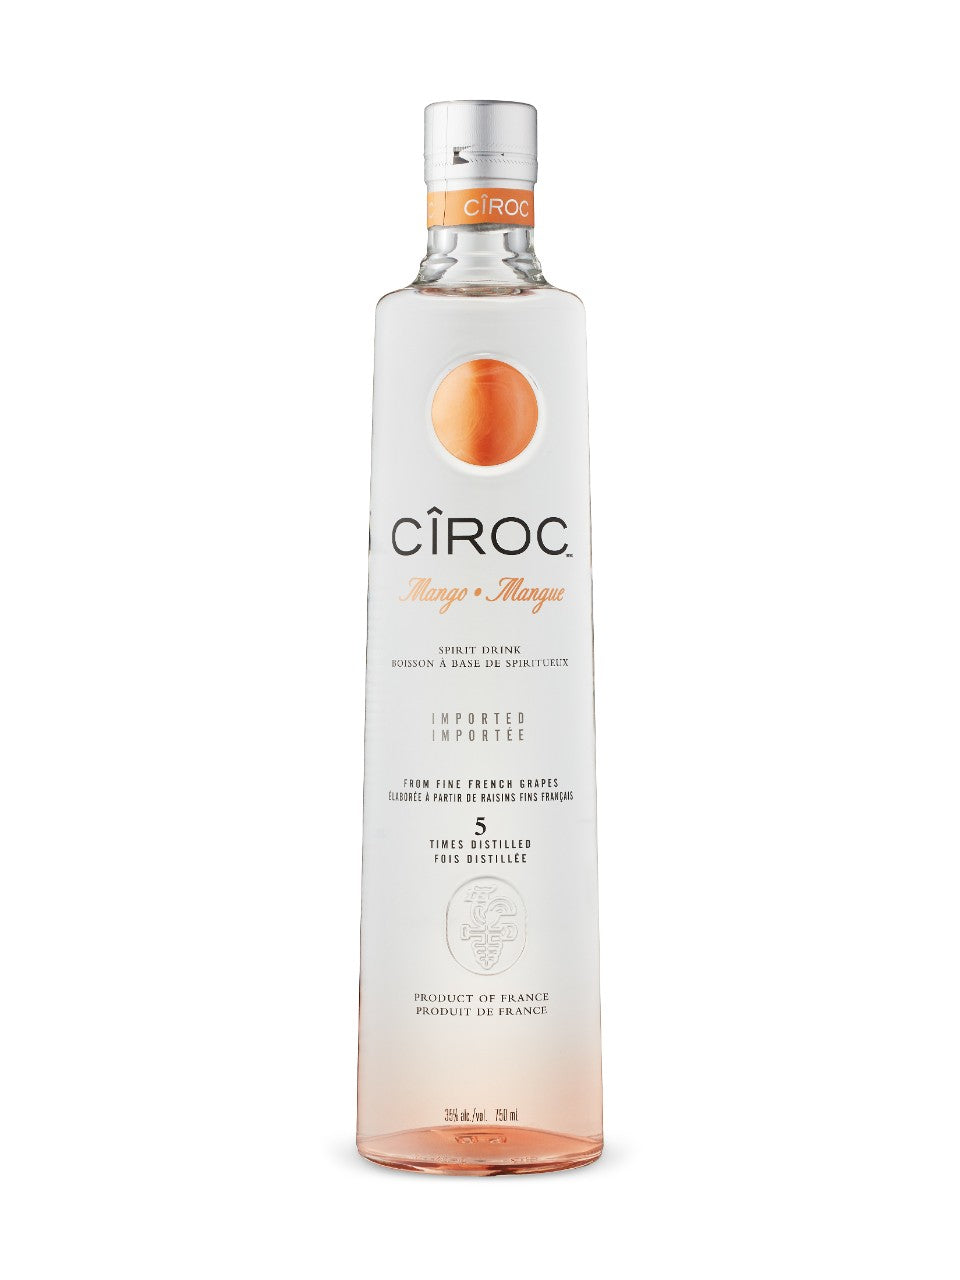 Ciroc Mango Vodka 750mL bottle